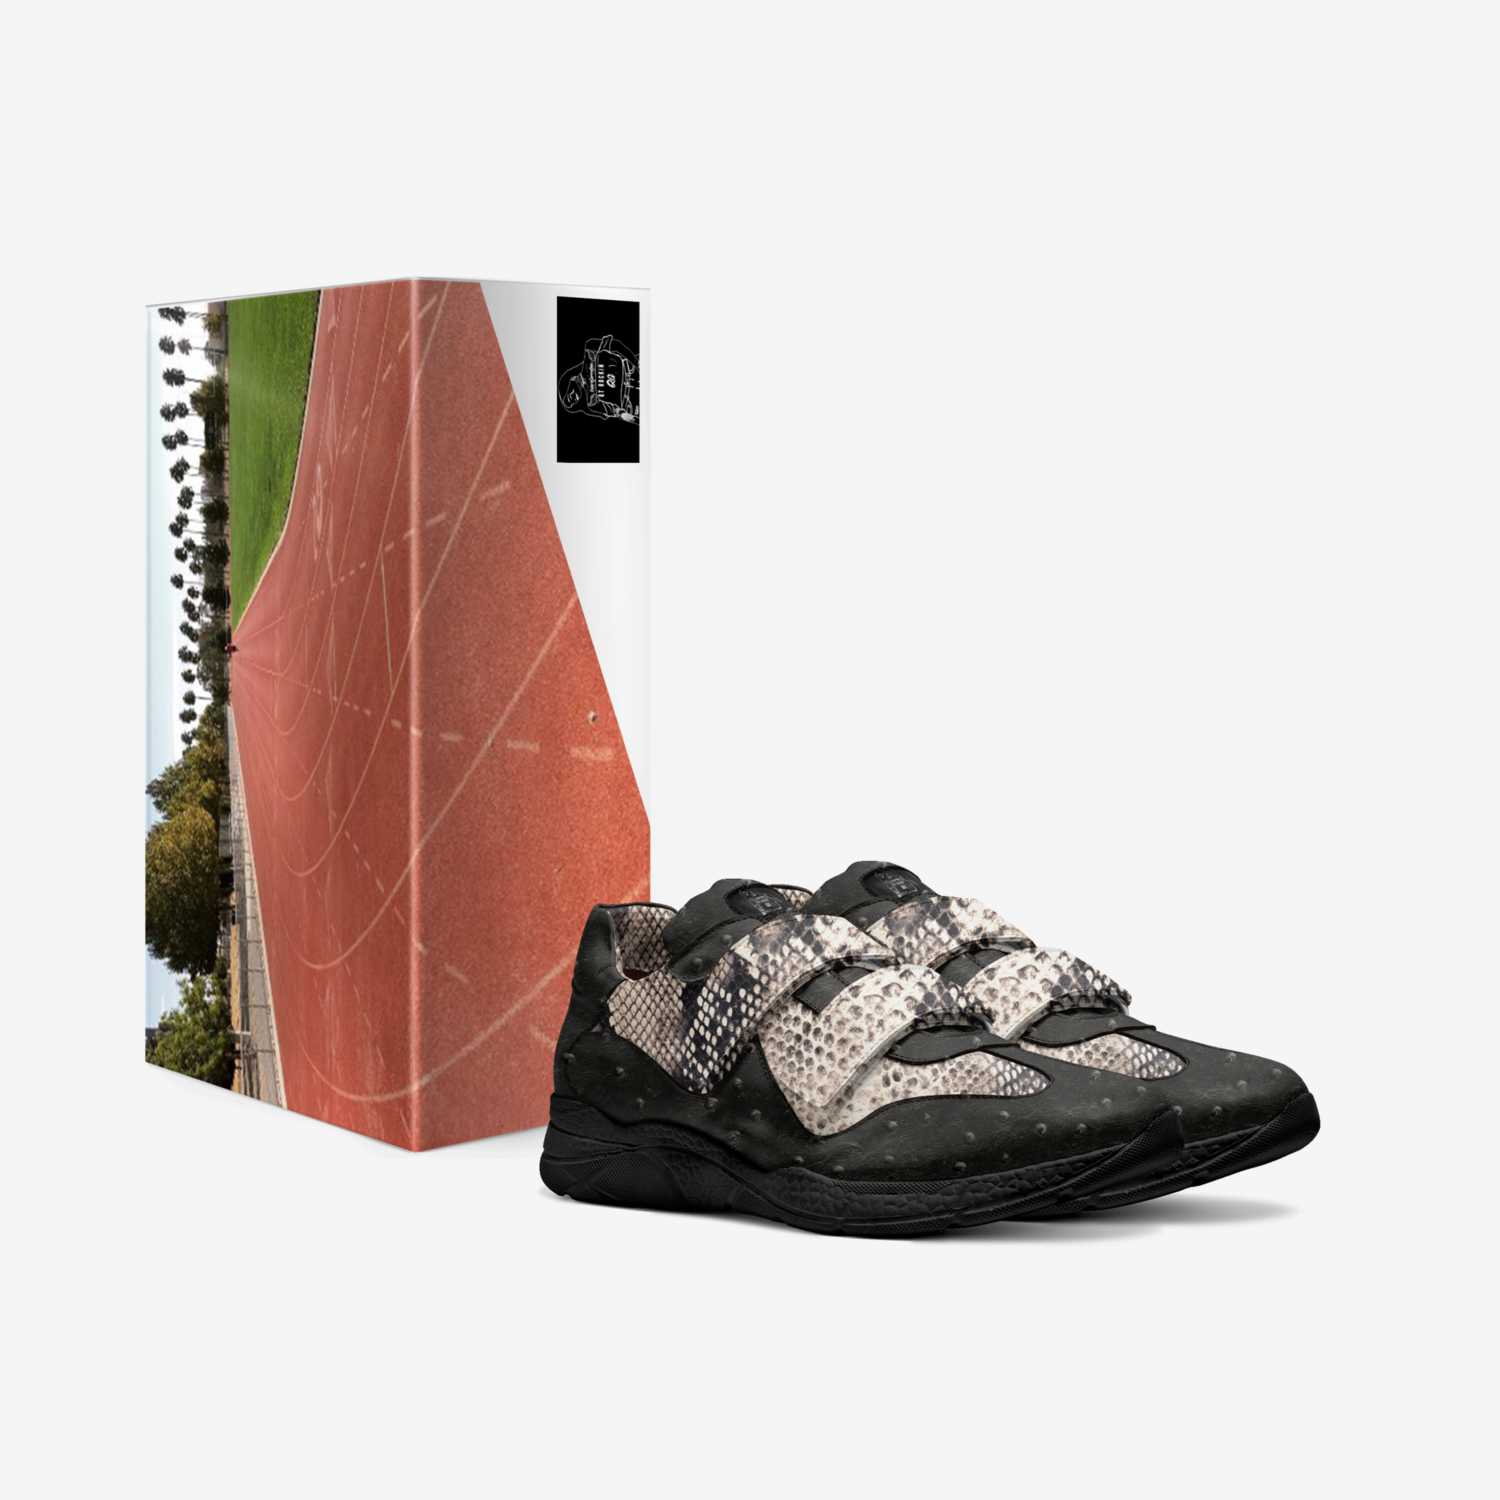 QG custom made in Italy shoes by Garrett Alexander | Box view